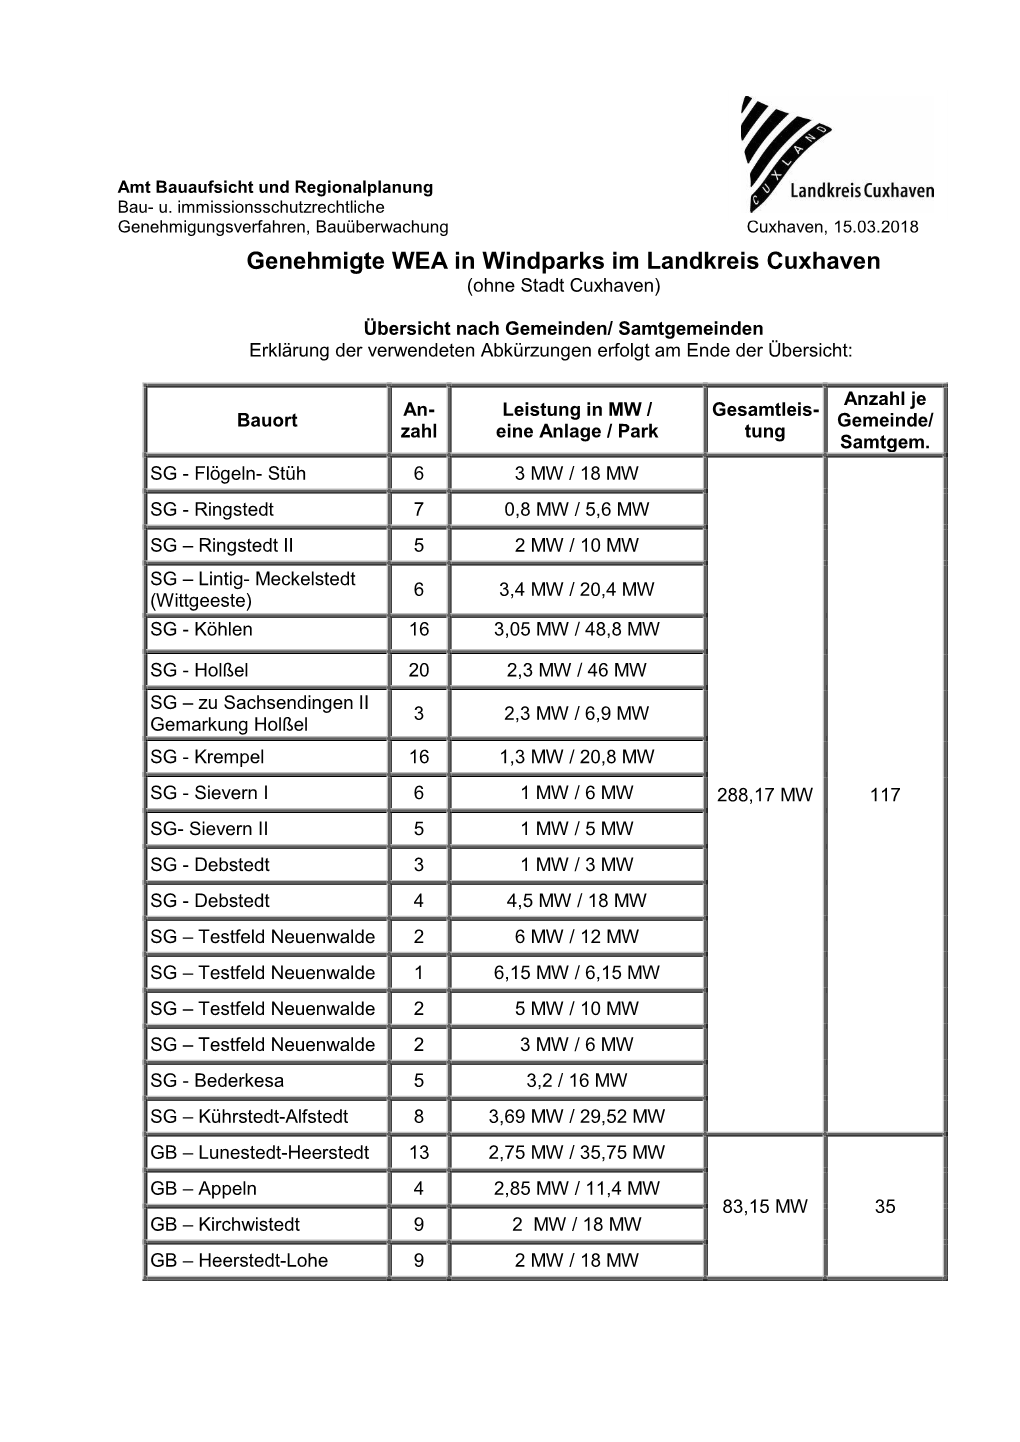 Genehmigte WEA in Windparks Im Landkreis Cuxhaven (Ohne Stadt Cuxhaven)